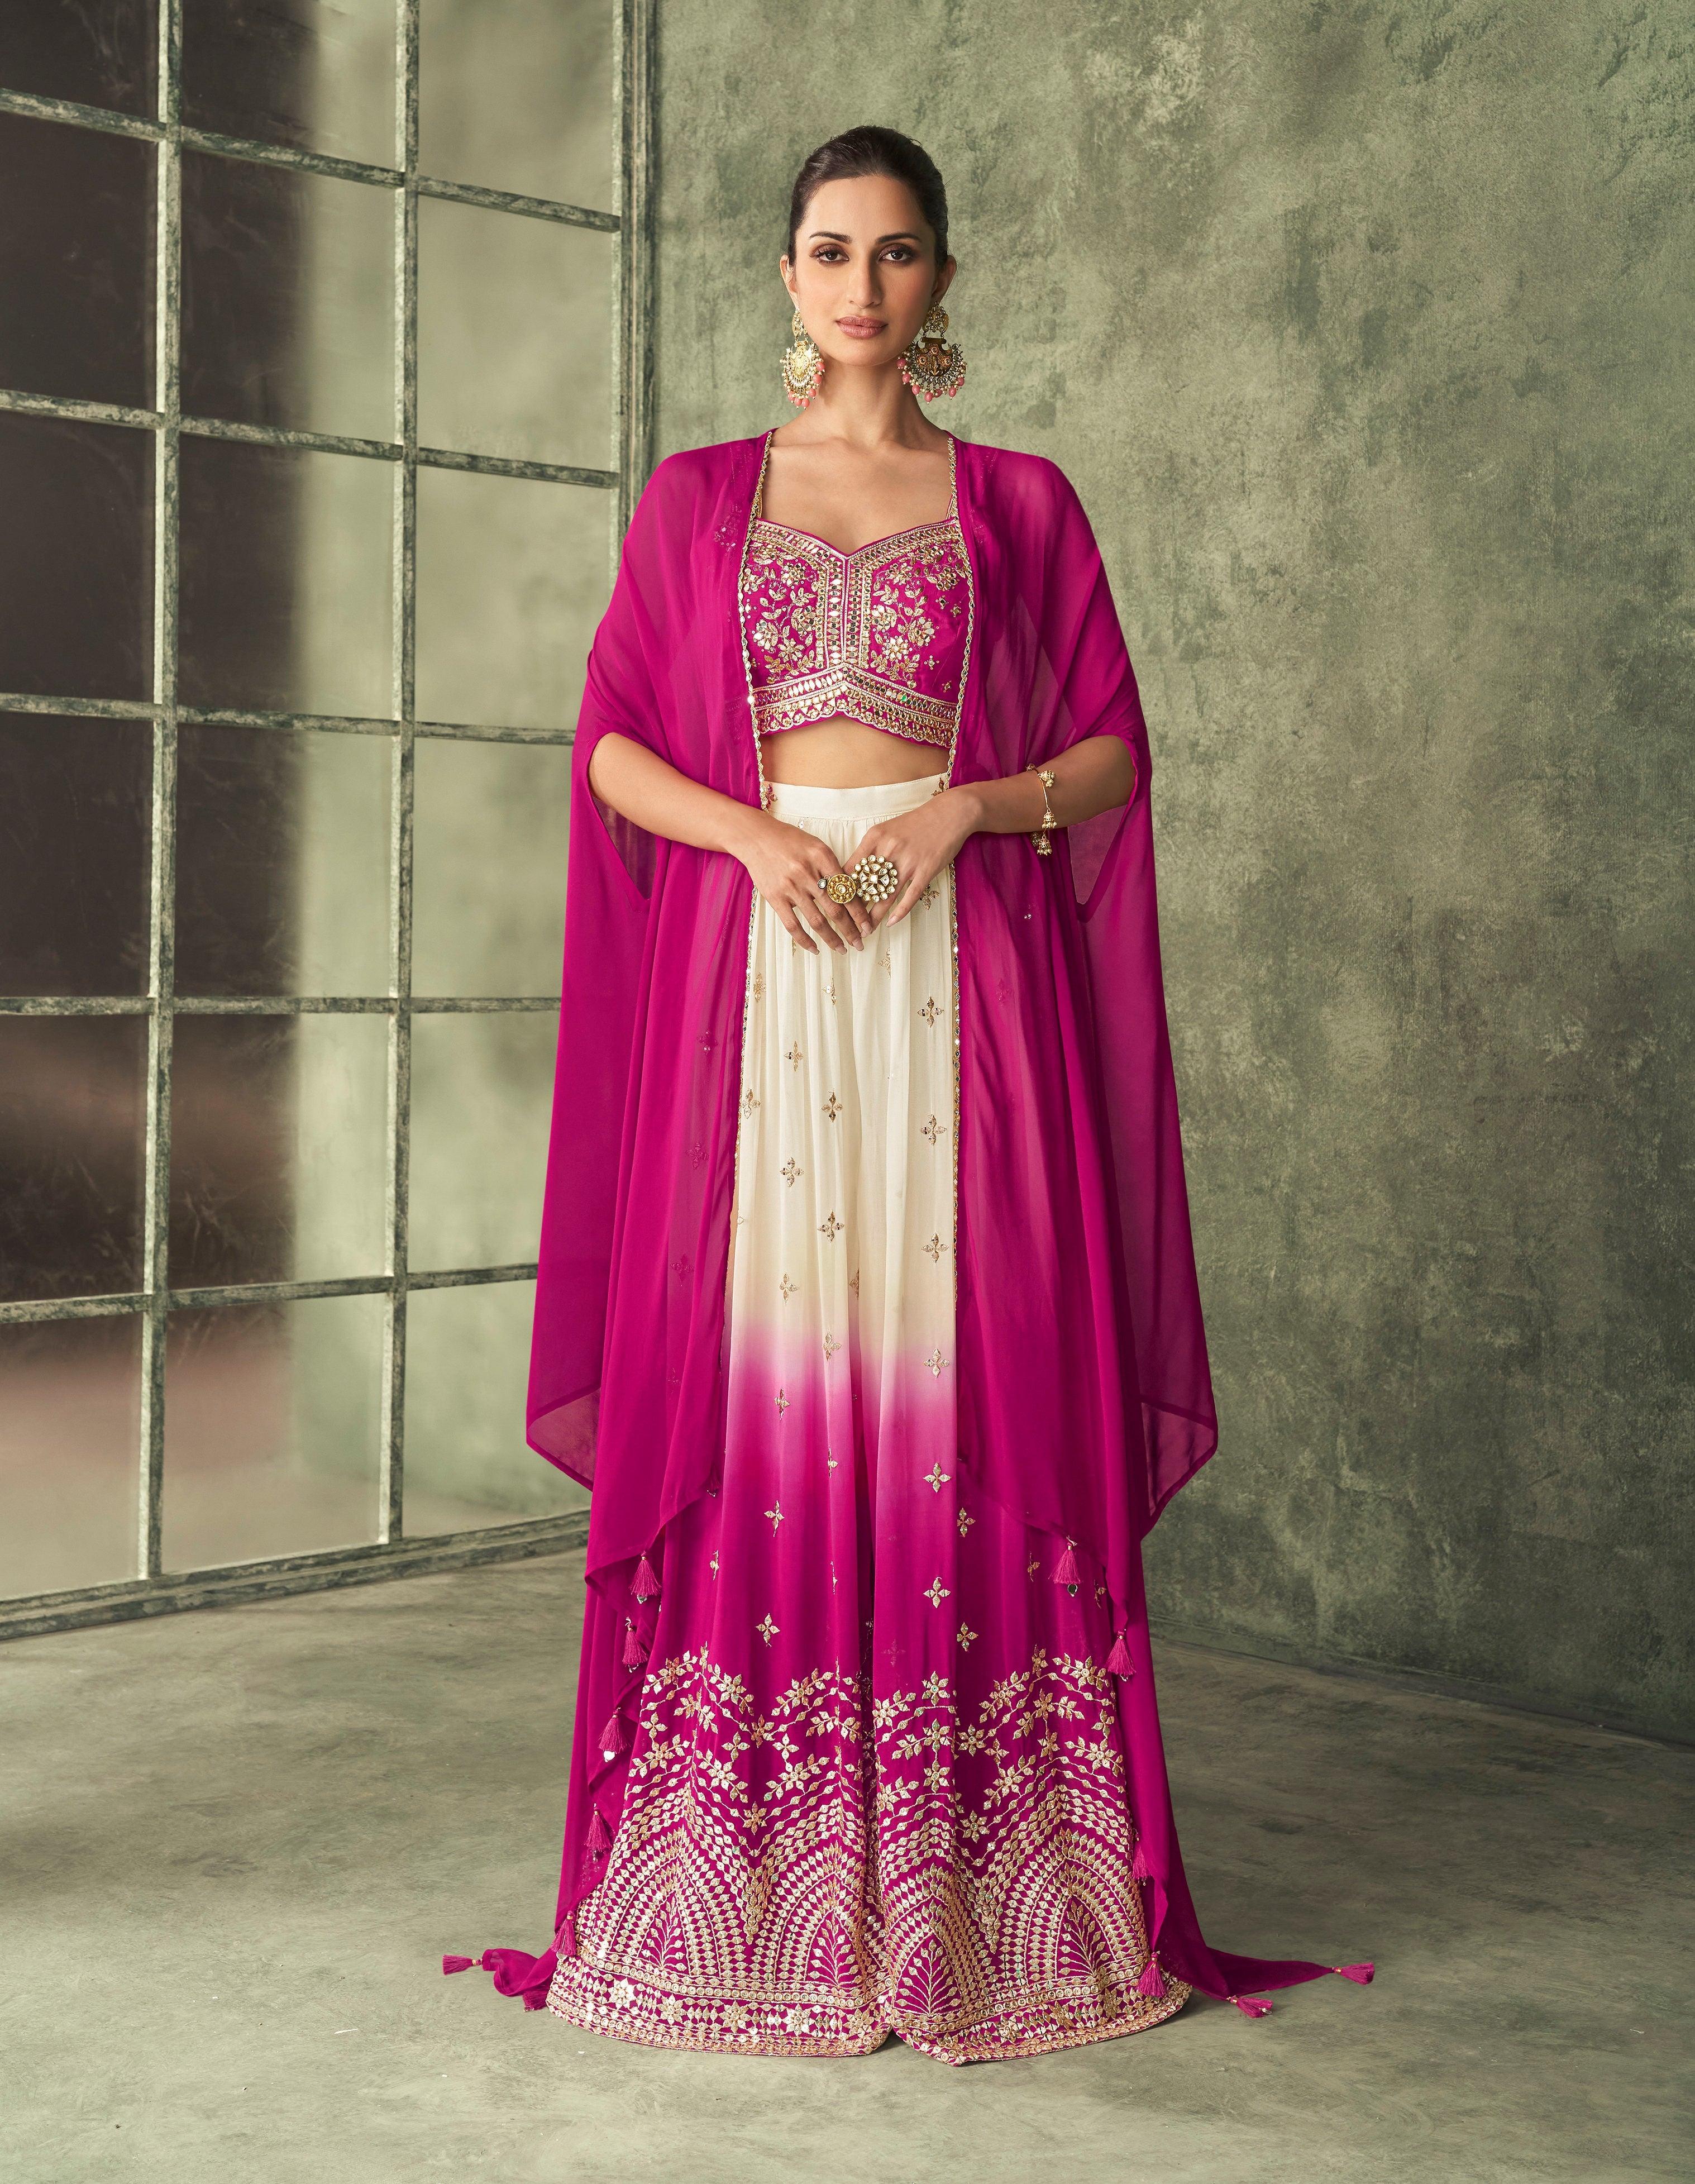 Indo western dress | Wedding lehenga designs, Indian wedding outfits,  Indian wedding dress